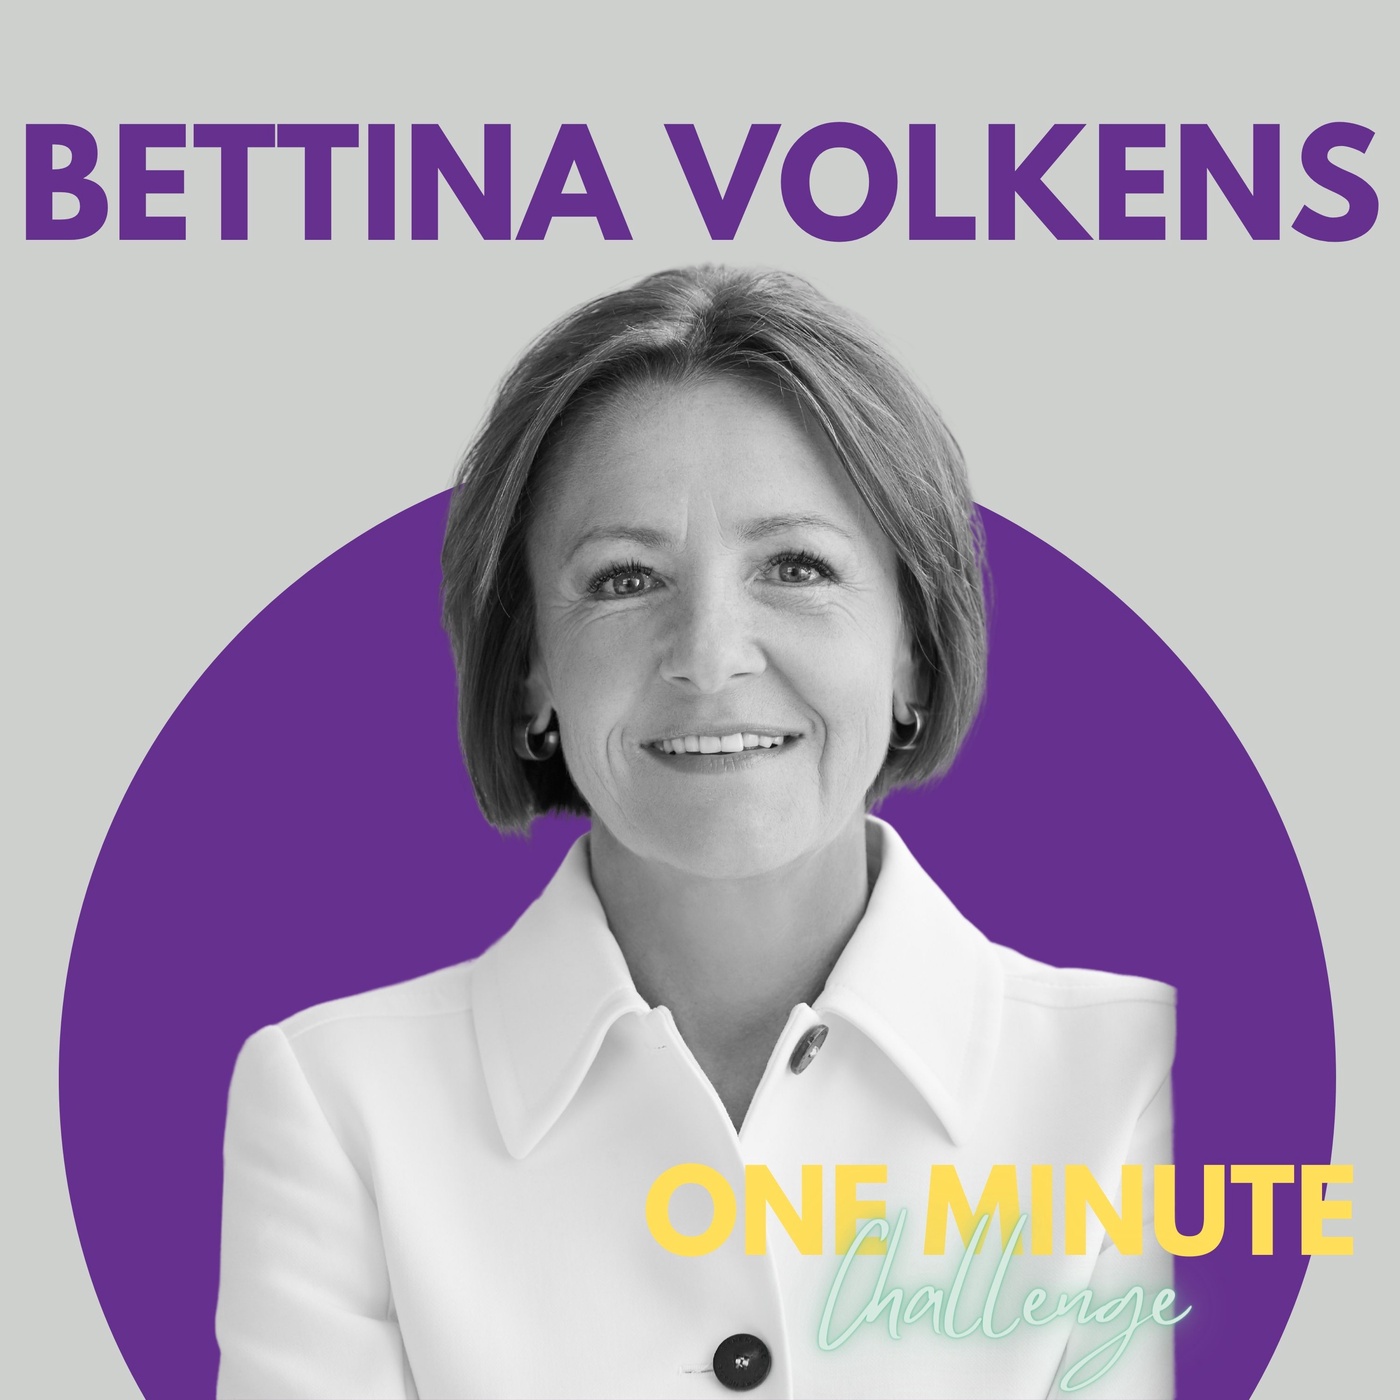 # 18 One Minute Challenge - Dr. Bettina Volkens